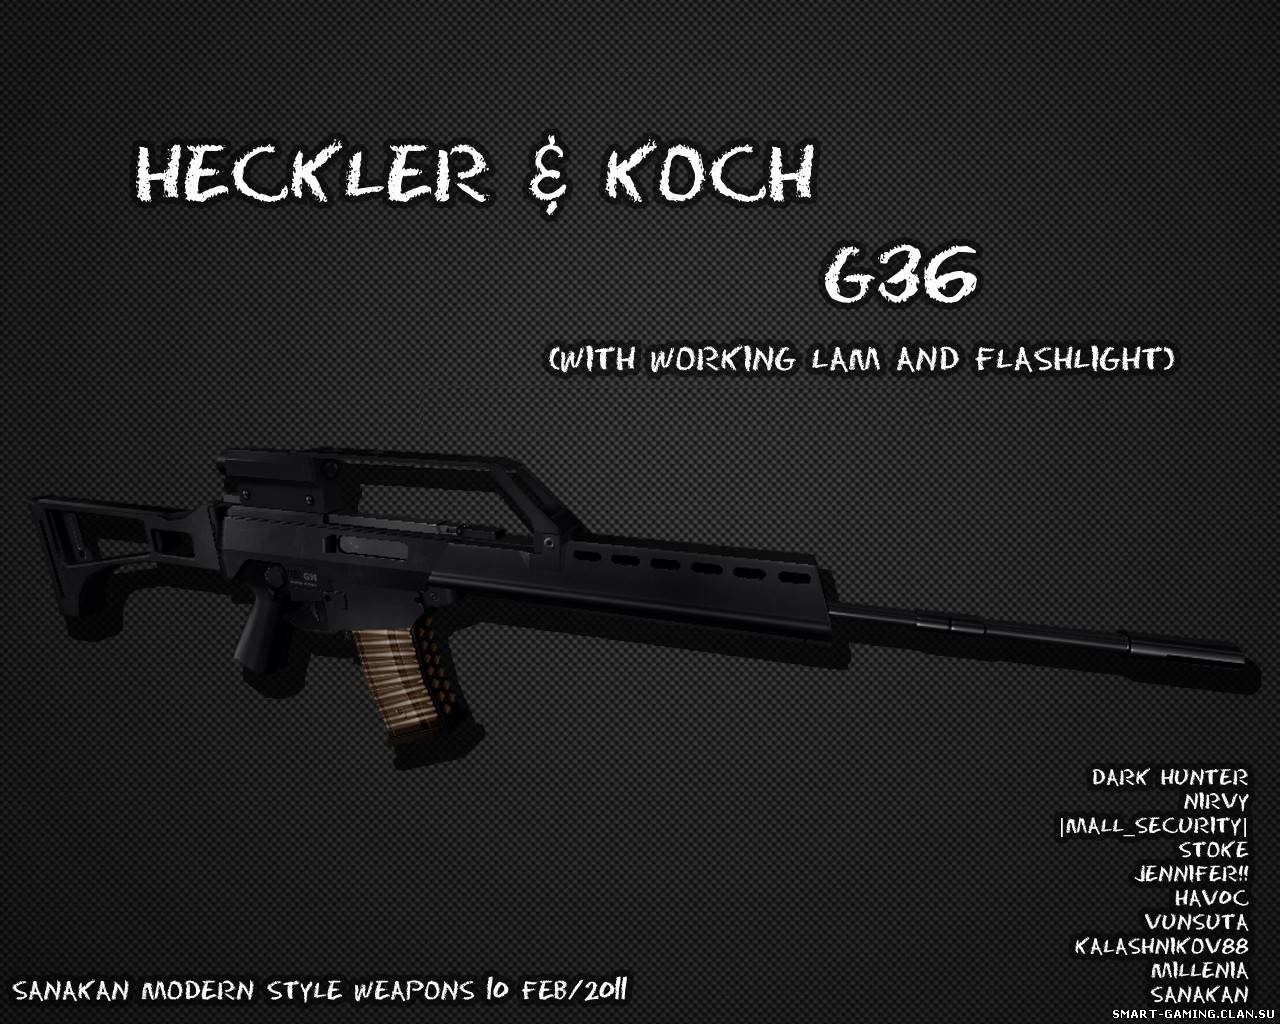 HK G36 Rifle